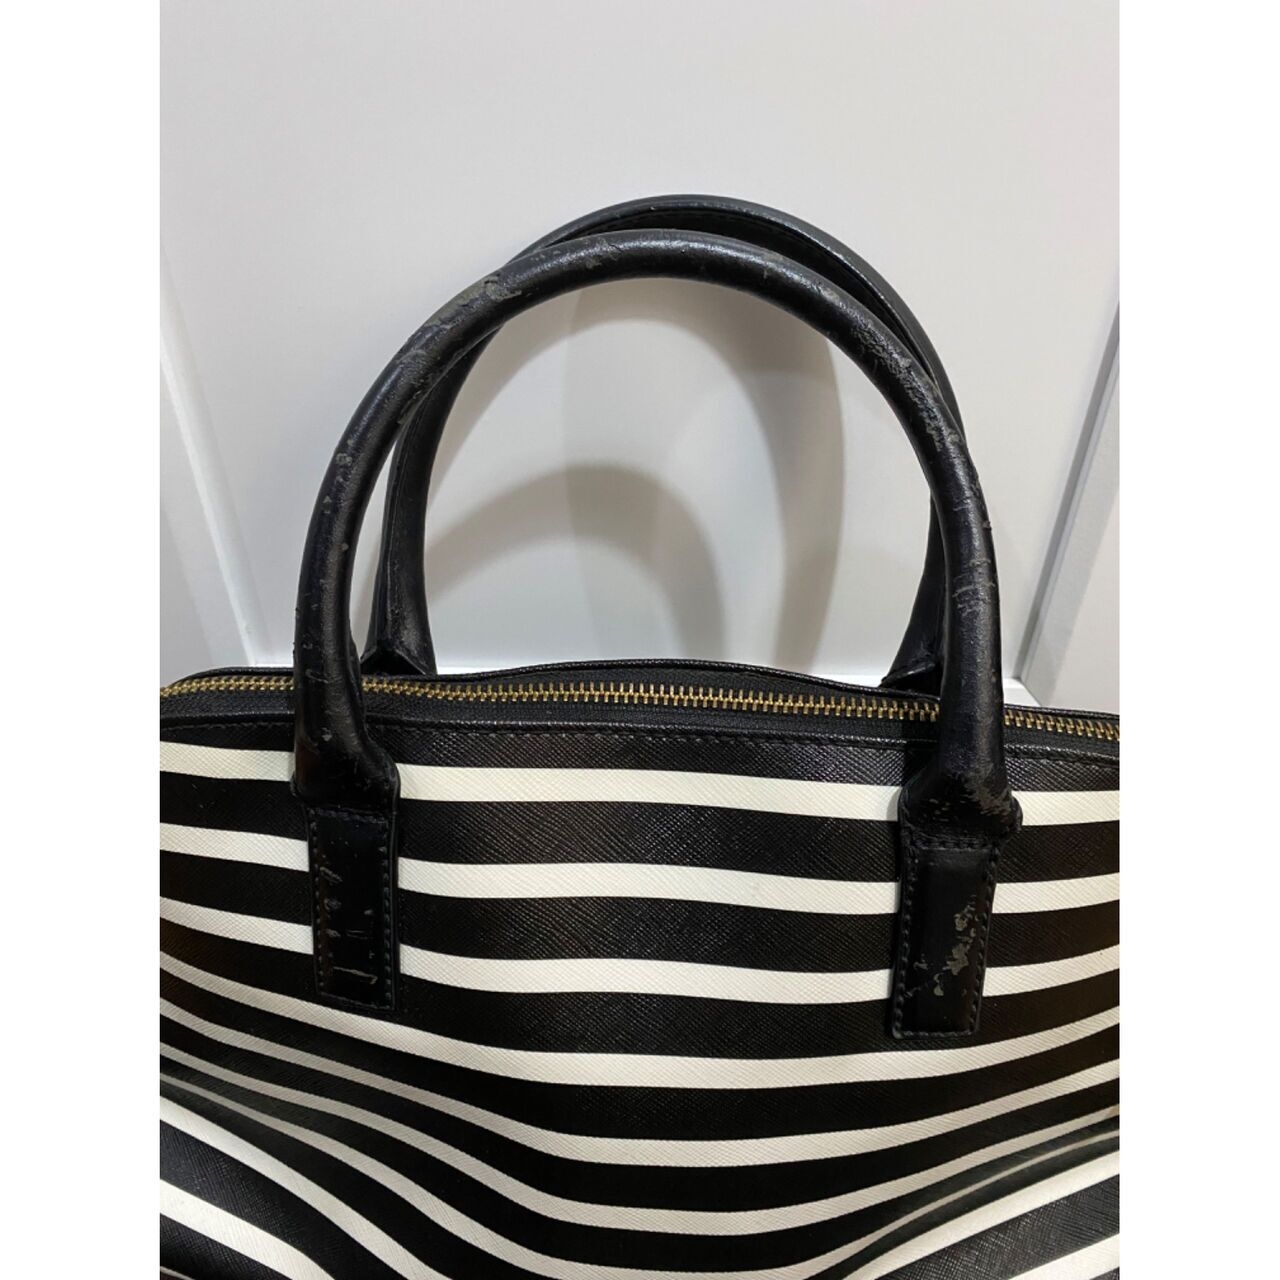 Kate Spade New York Black & White Stripes Handbag